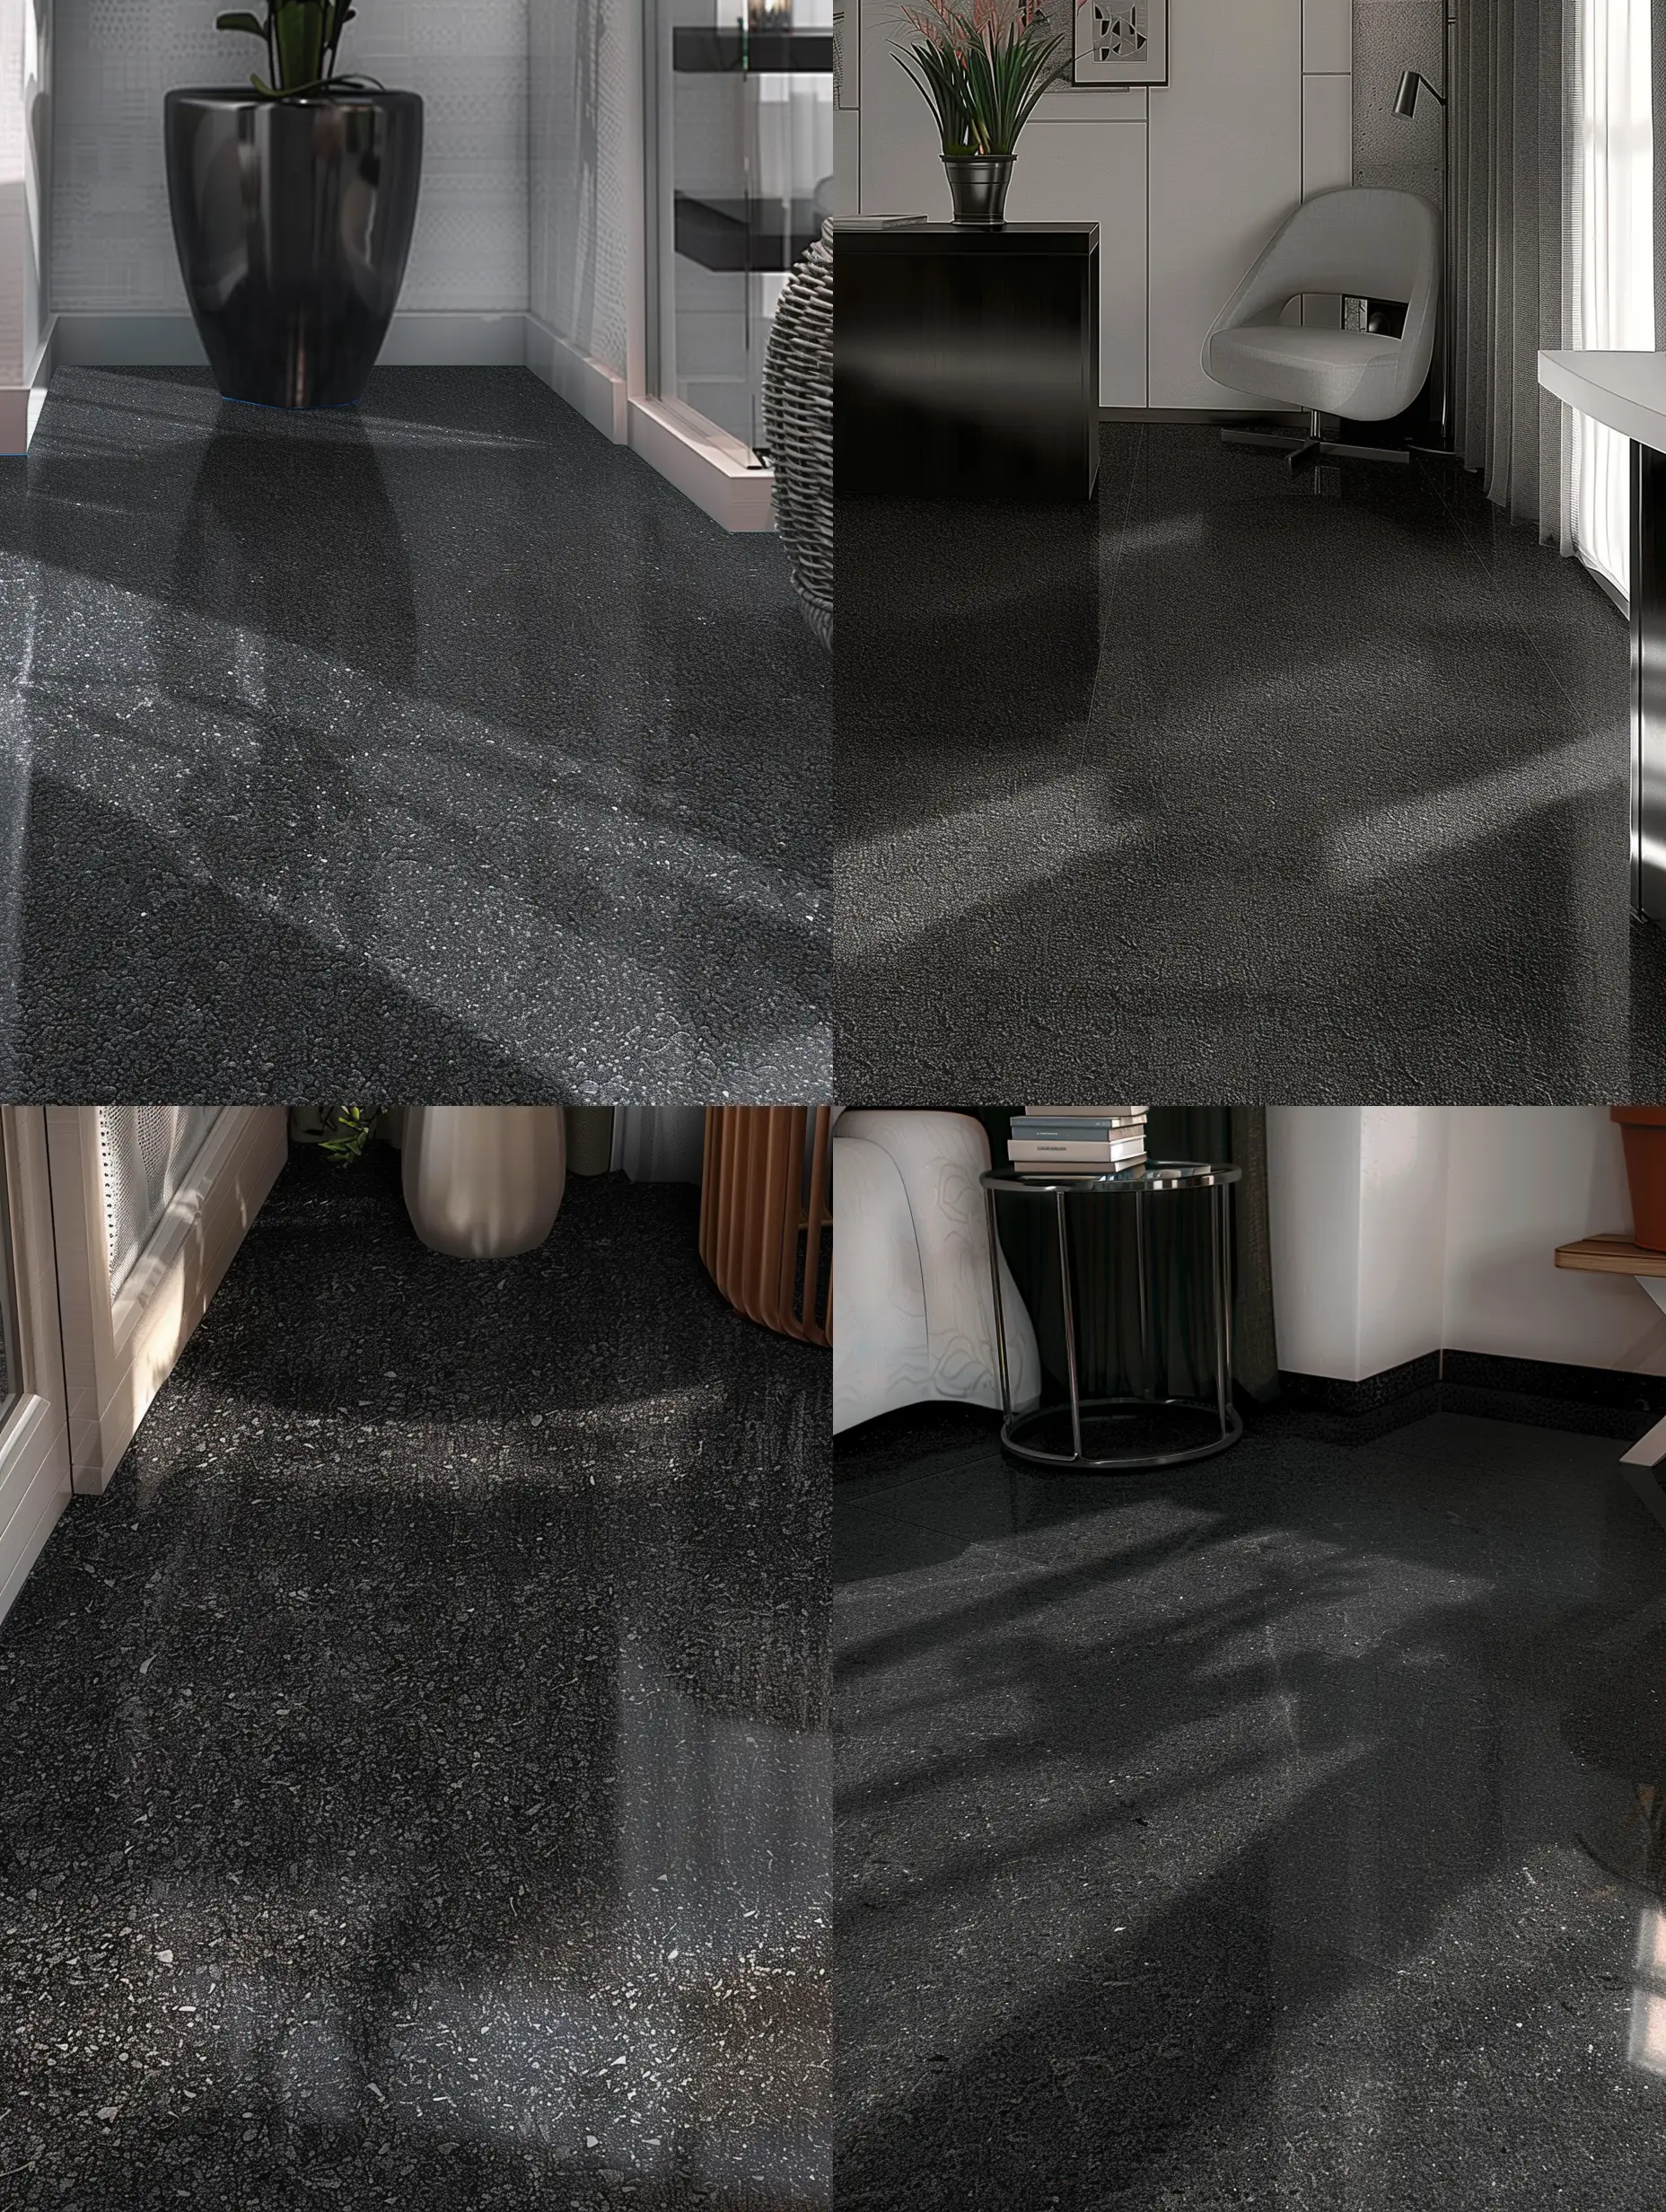 Elegant-Black-Granite-Floor-with-Subtle-Veining